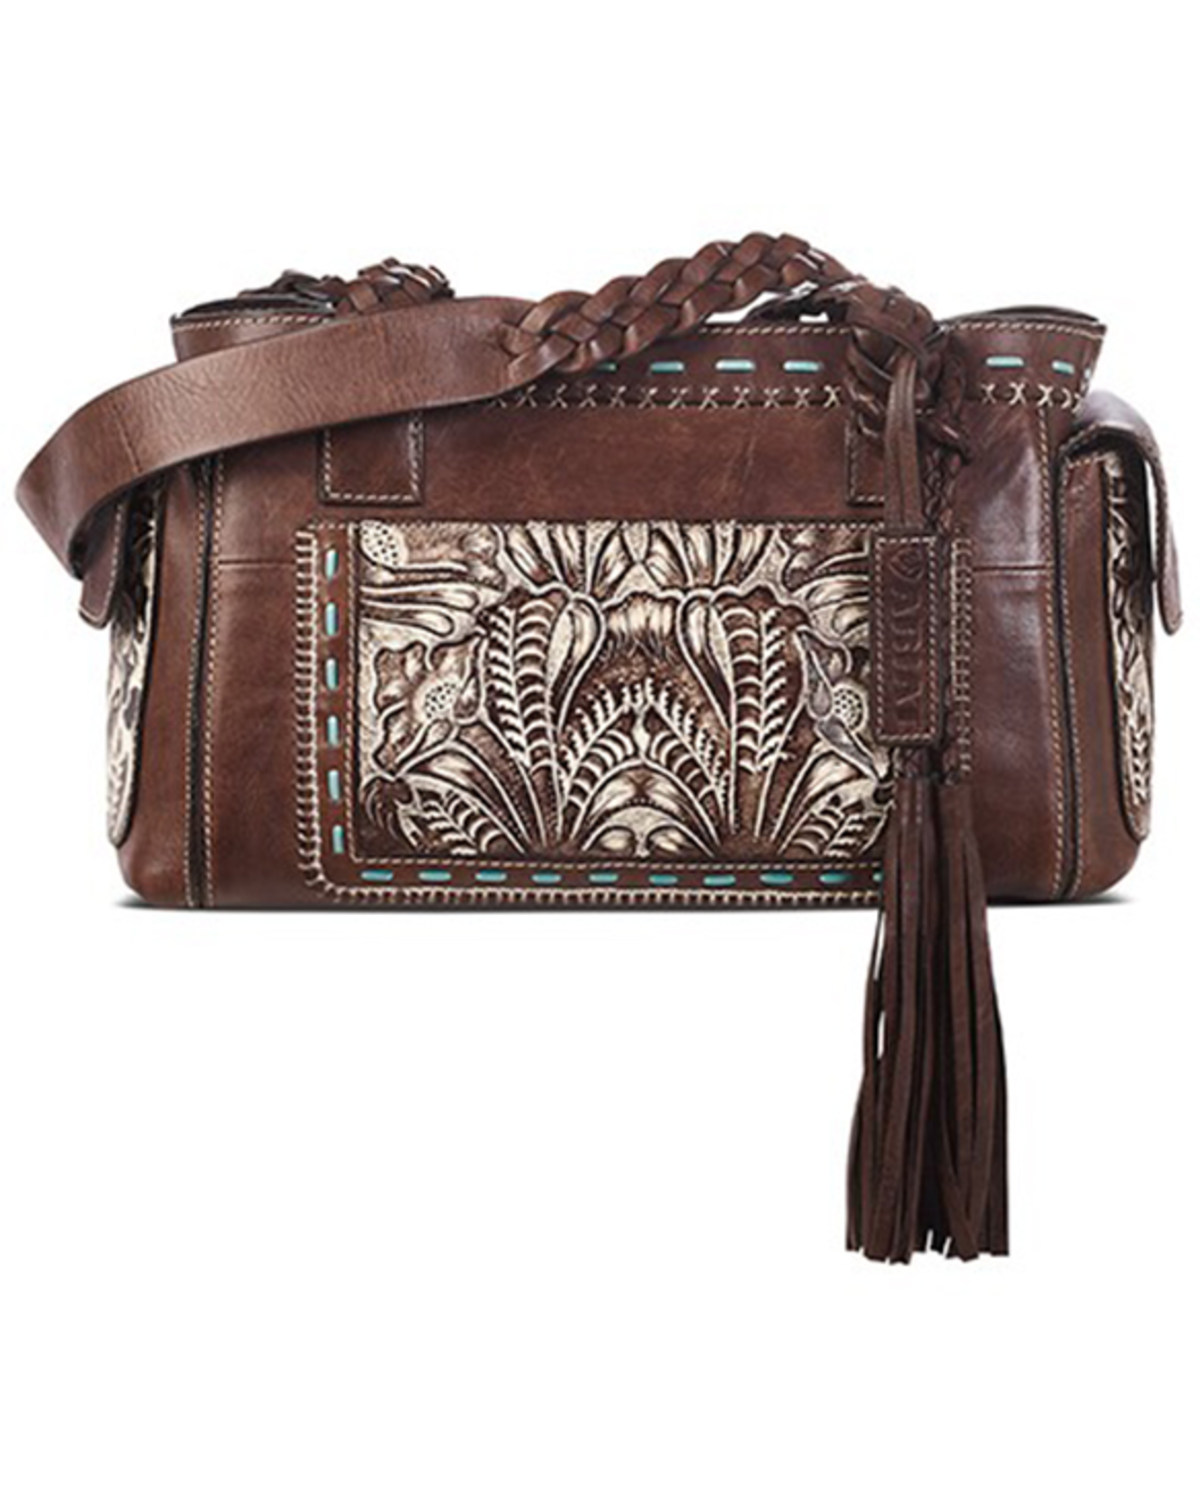 Ariat Women's Rori Concealed Carry Satchel Handbag